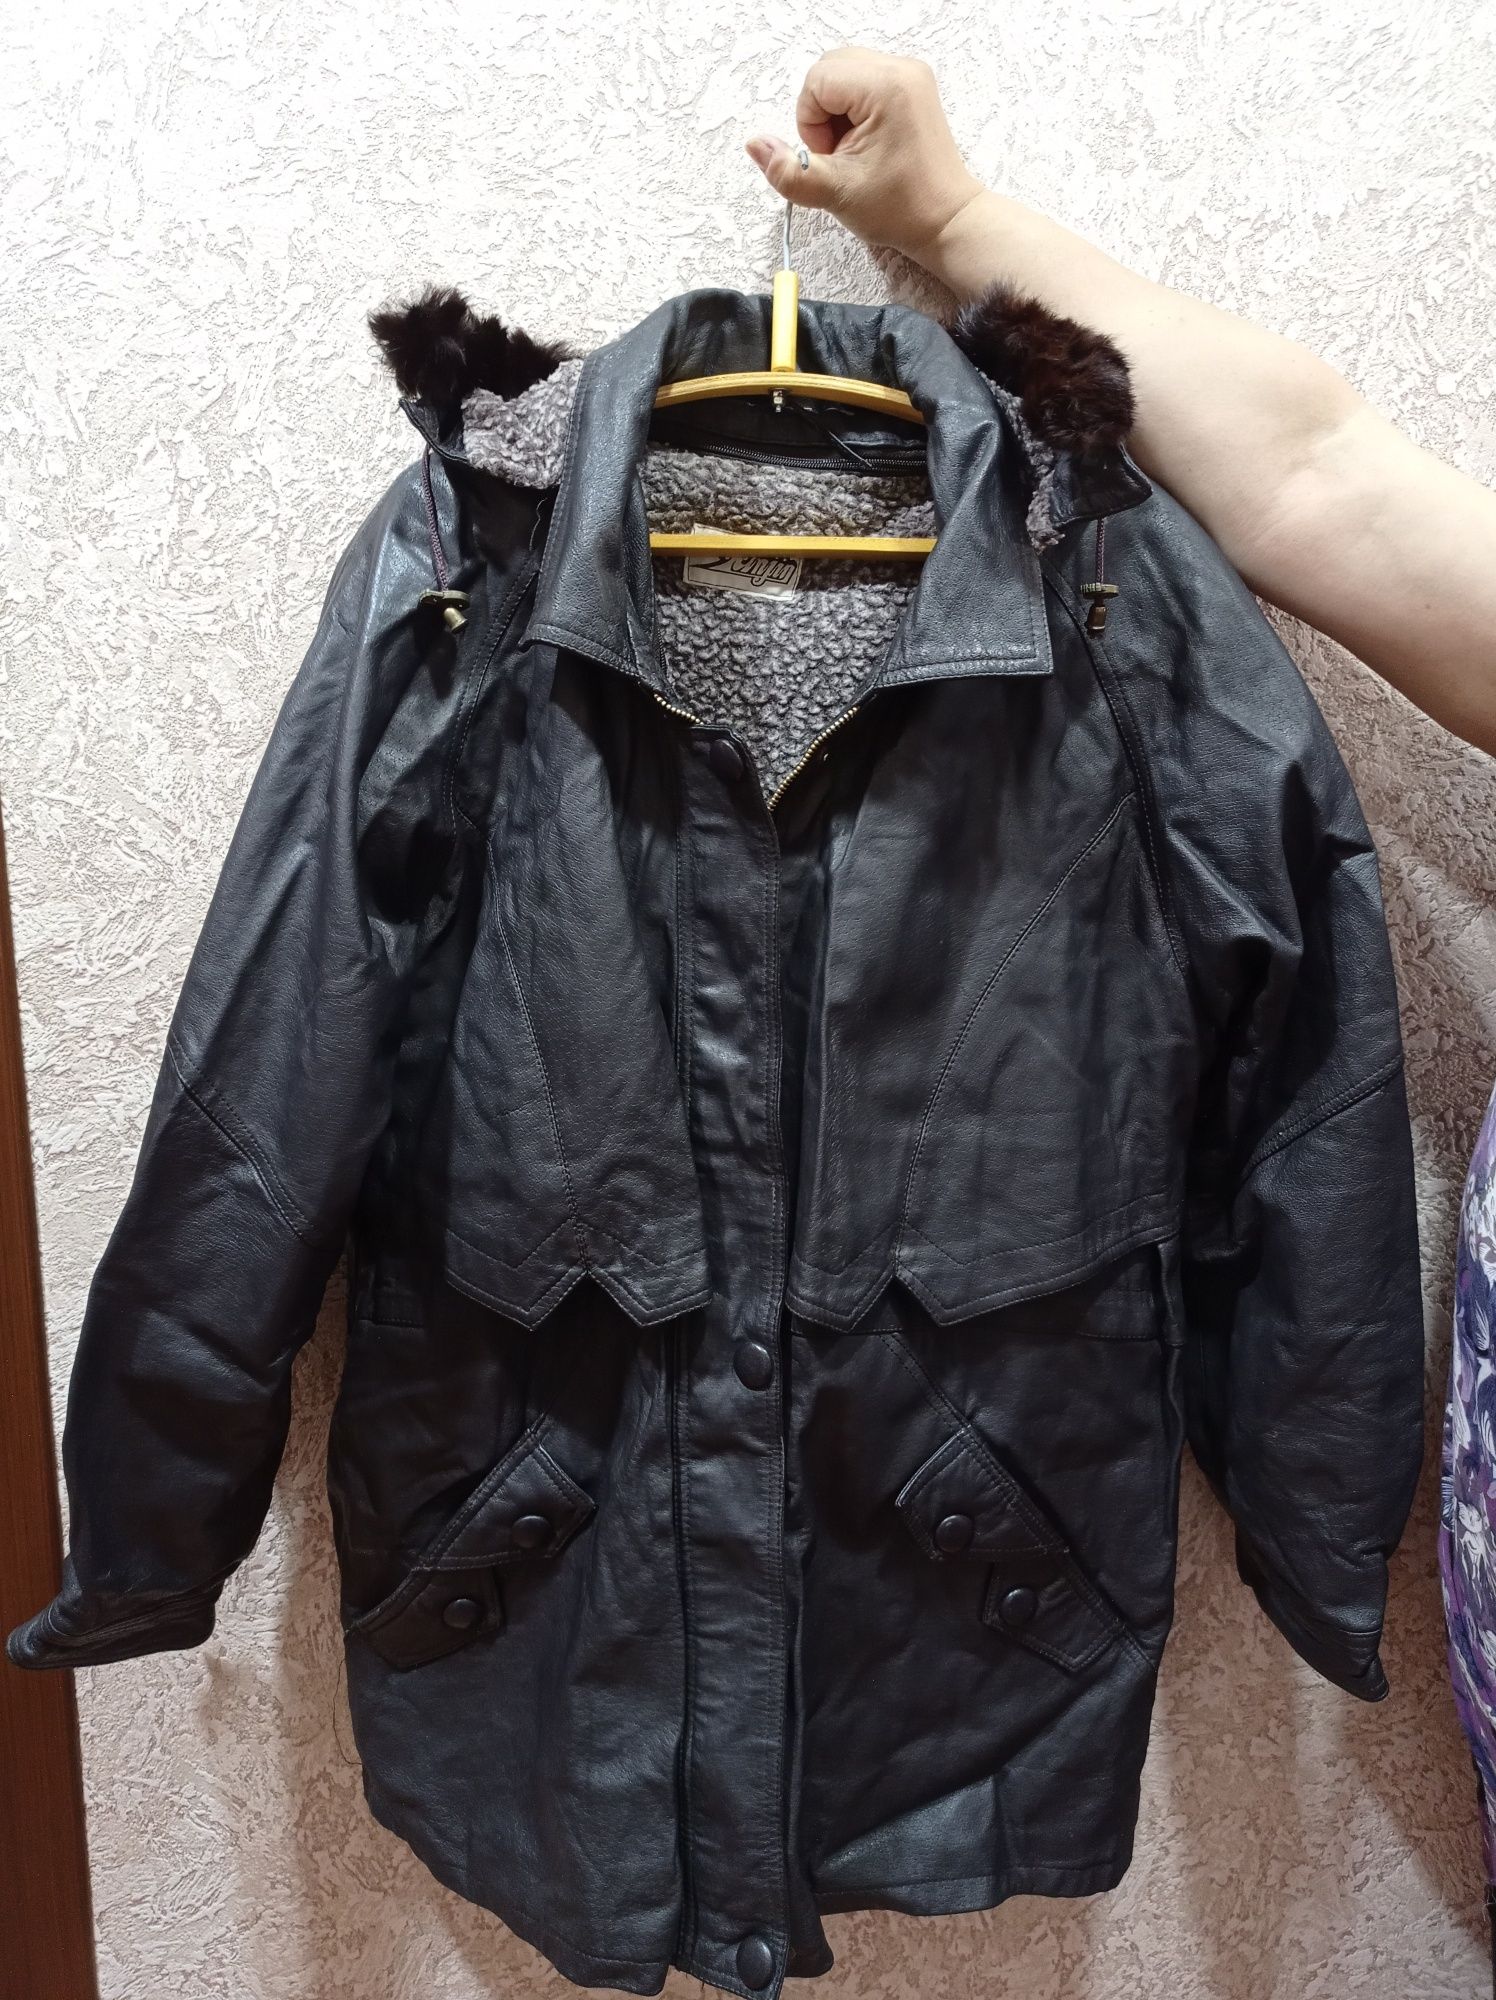 Женская зимняя куртка чиста-кожаная / Ayollar kurtkasi toza kojali